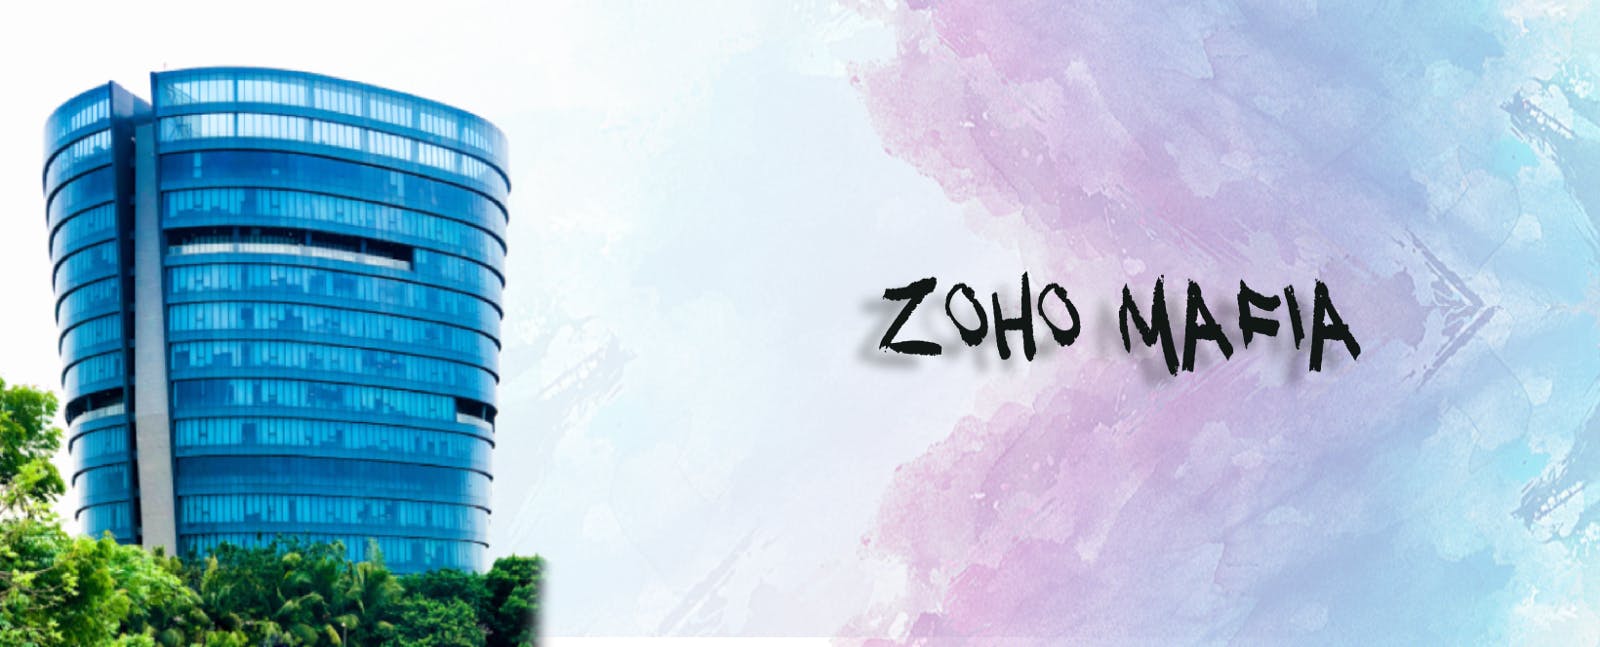 /zoho-mafia-16-companies-founded-by-former-zoho-employees-eafac85ff2ea feature image